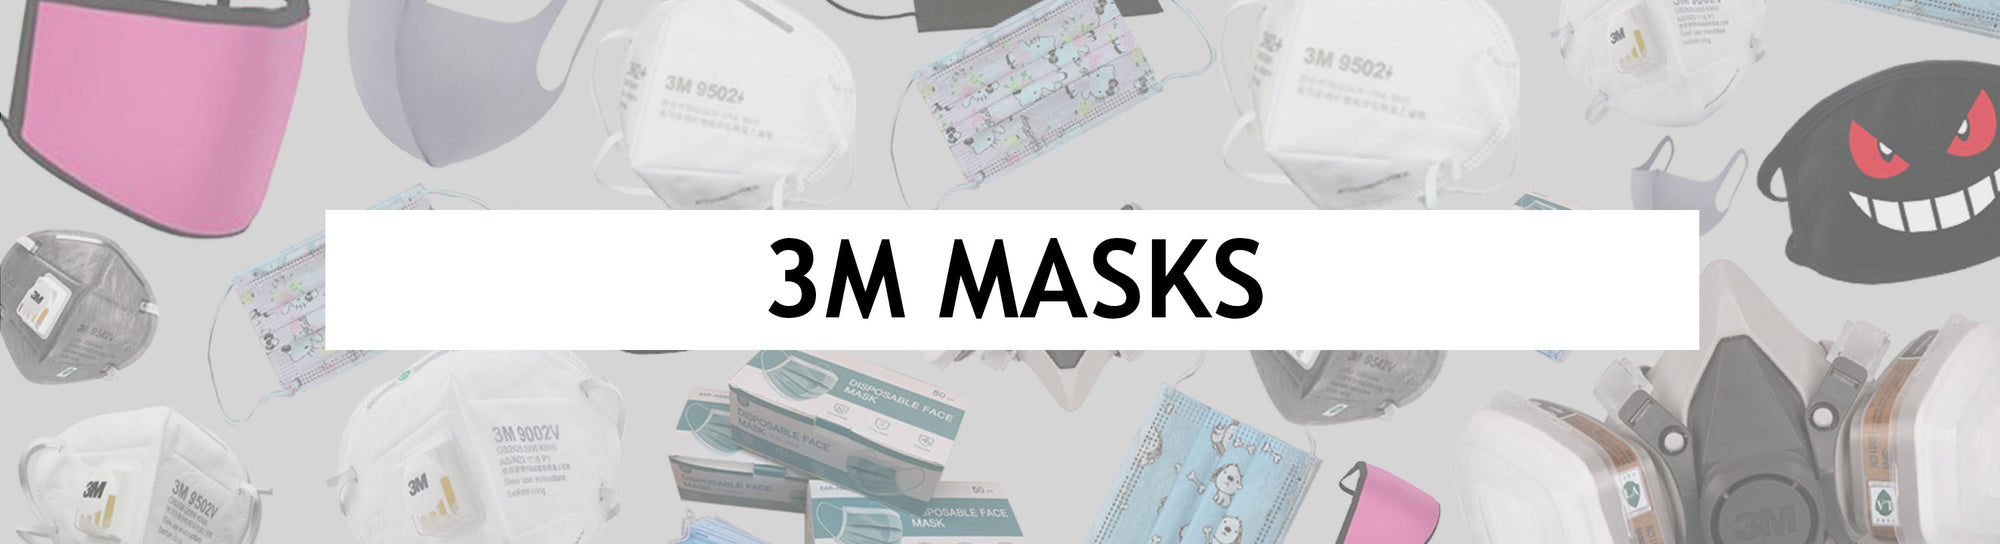 3M Masks